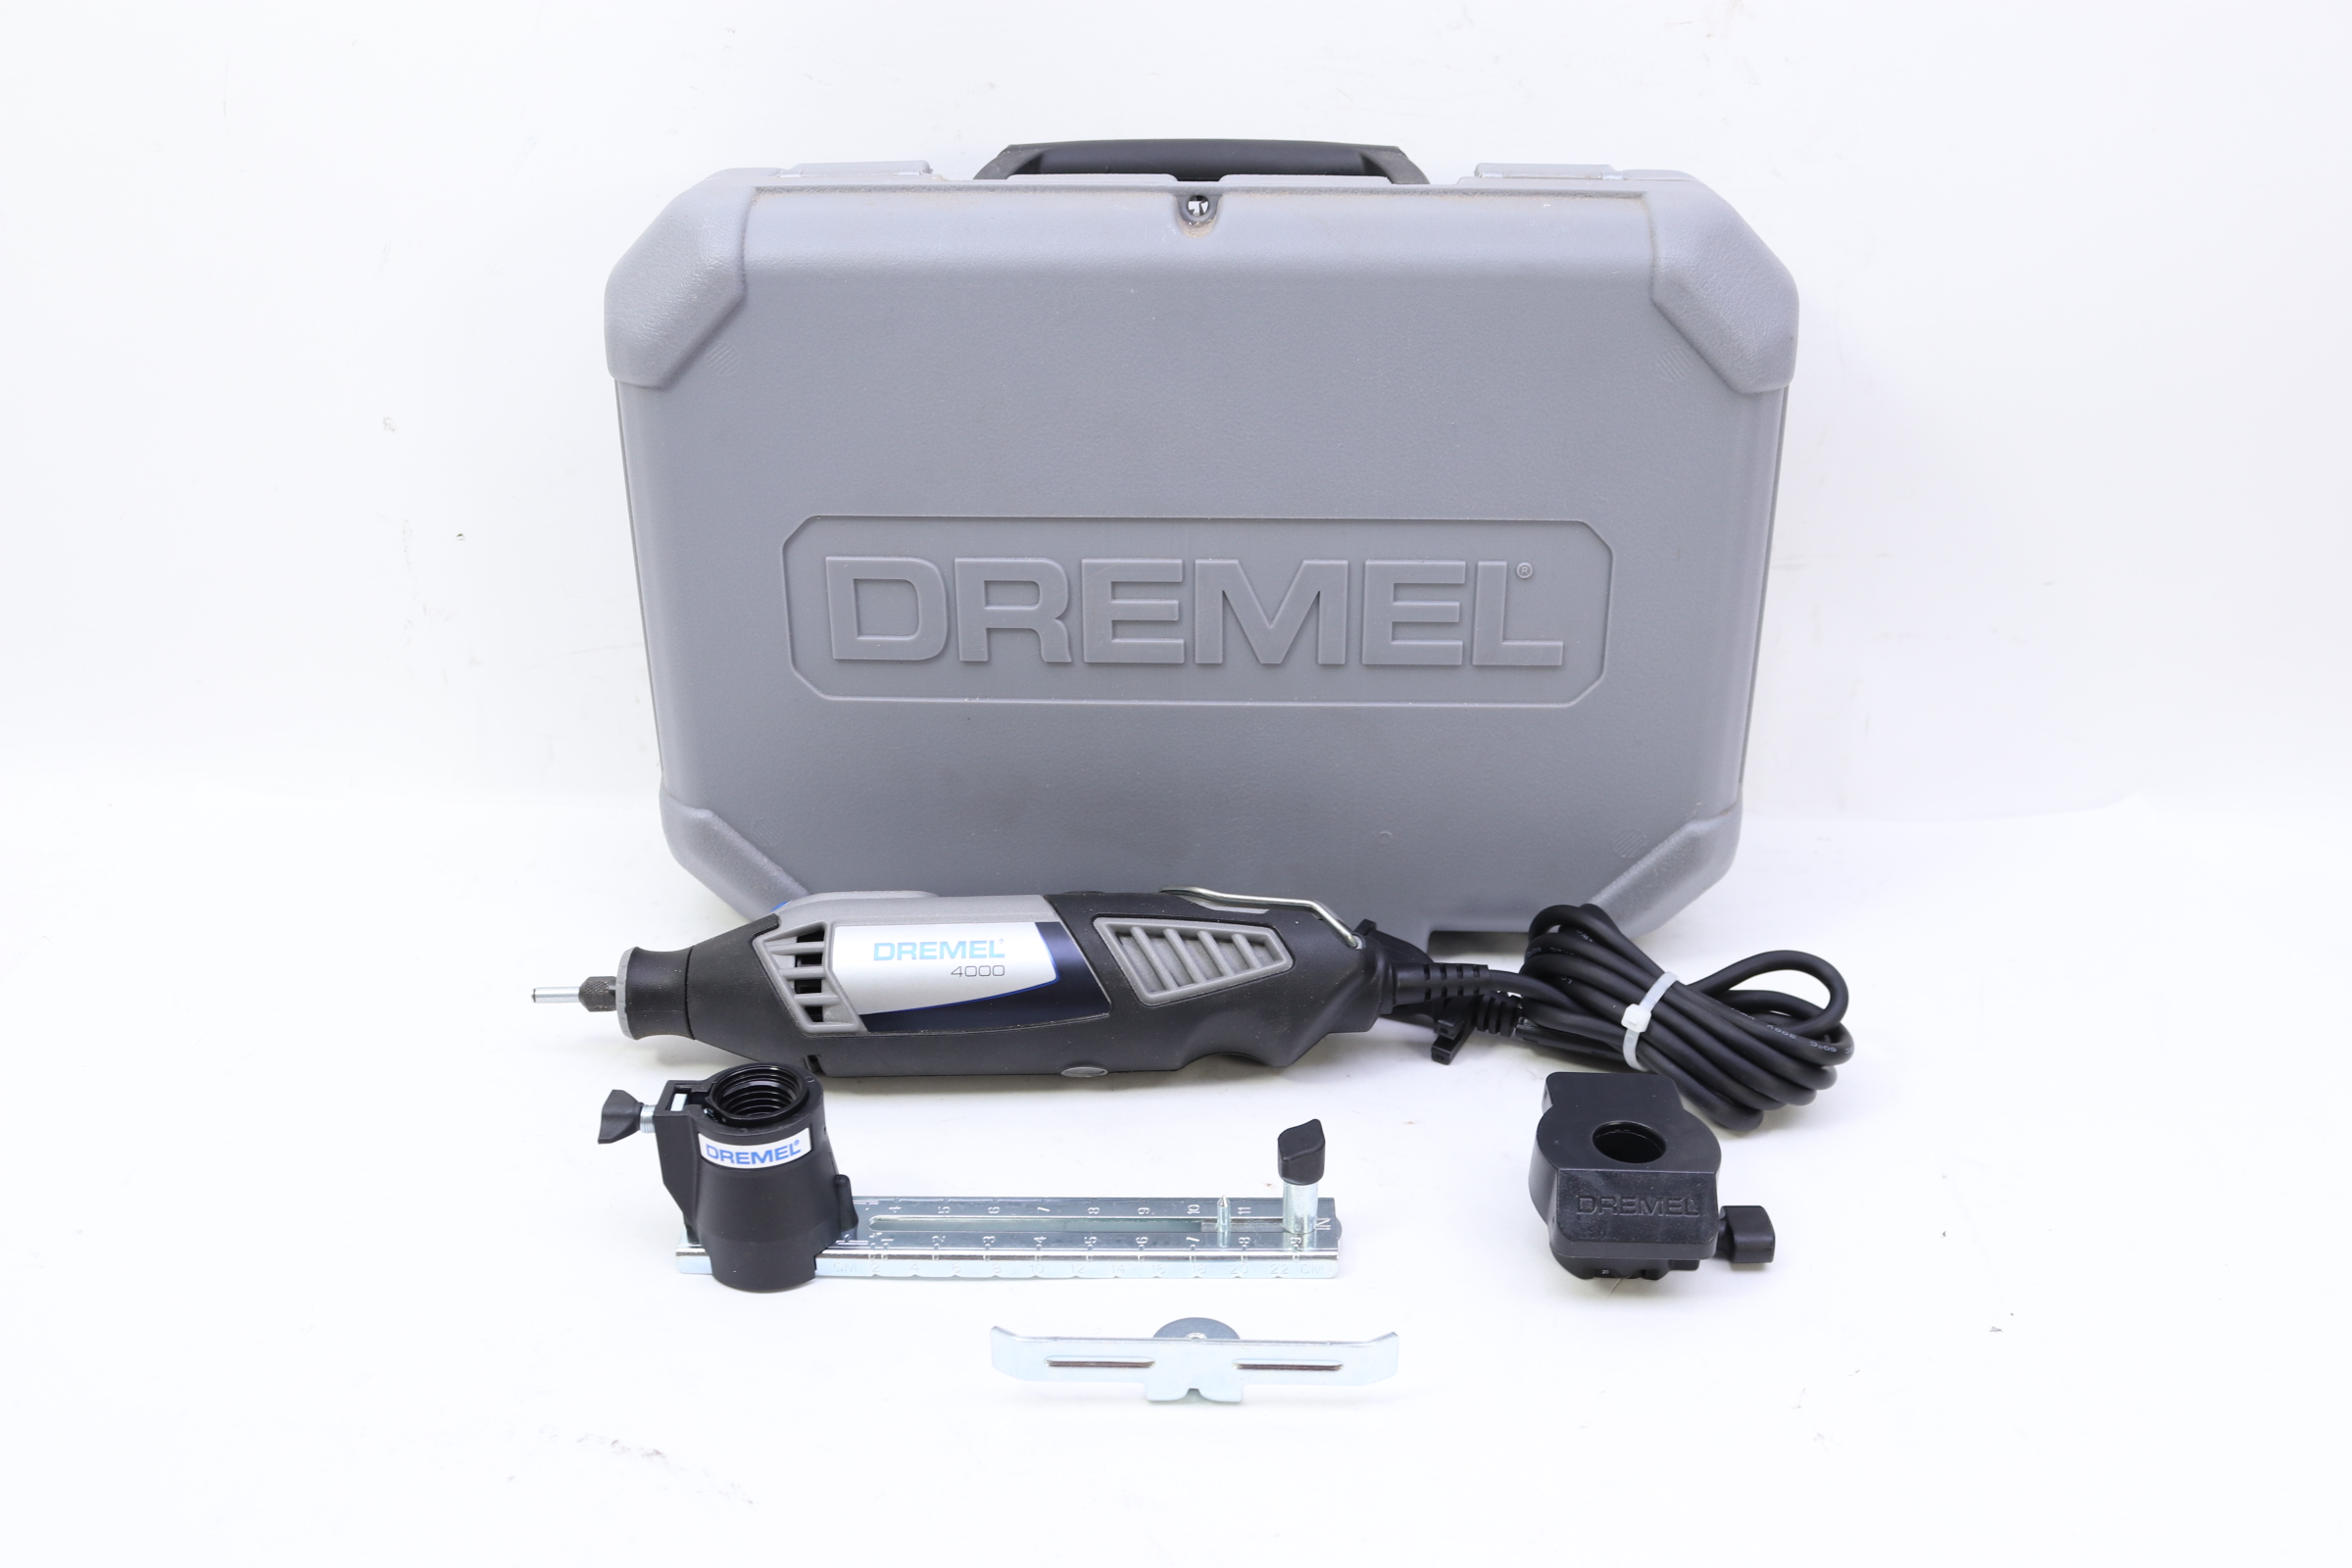 Dremel 4000-4/34 High Performance Variable-Speed Rotary Tool Kit